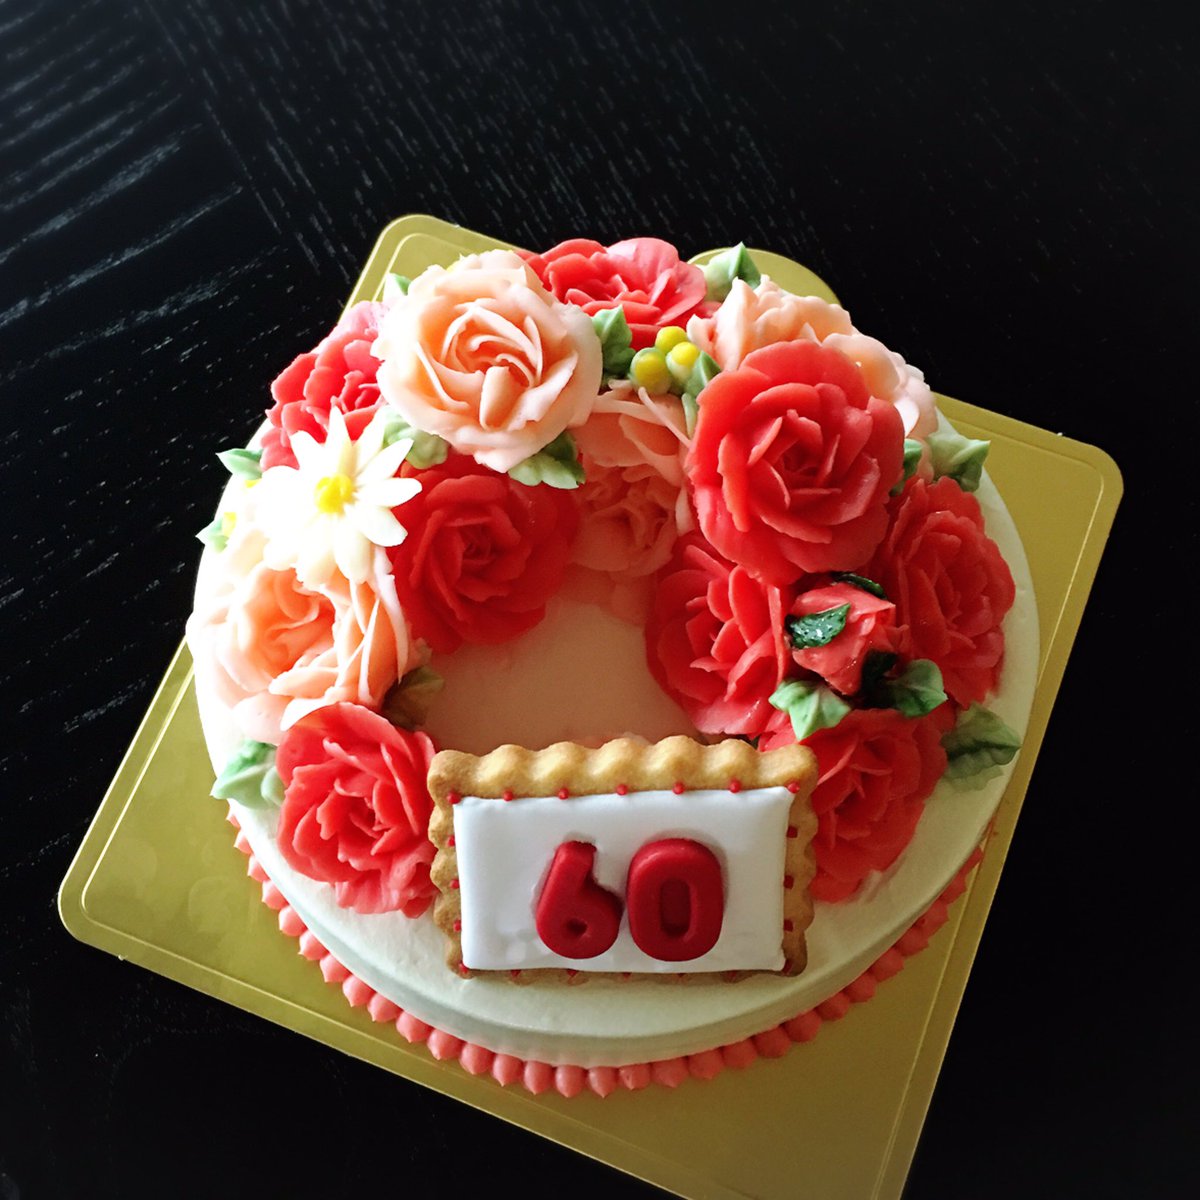 Cafe De Realite Twitter પર 本日のオーダーケーキ 還暦のお祝いフラワーケーキです 赤を入れて華やかに とのオーダー豪華5号 おめでとうございます 岐阜フラワーケーキ オーダーケーキ 岐阜カフェ お菓子教室 フラワーカップケーキ お花絞り 還暦